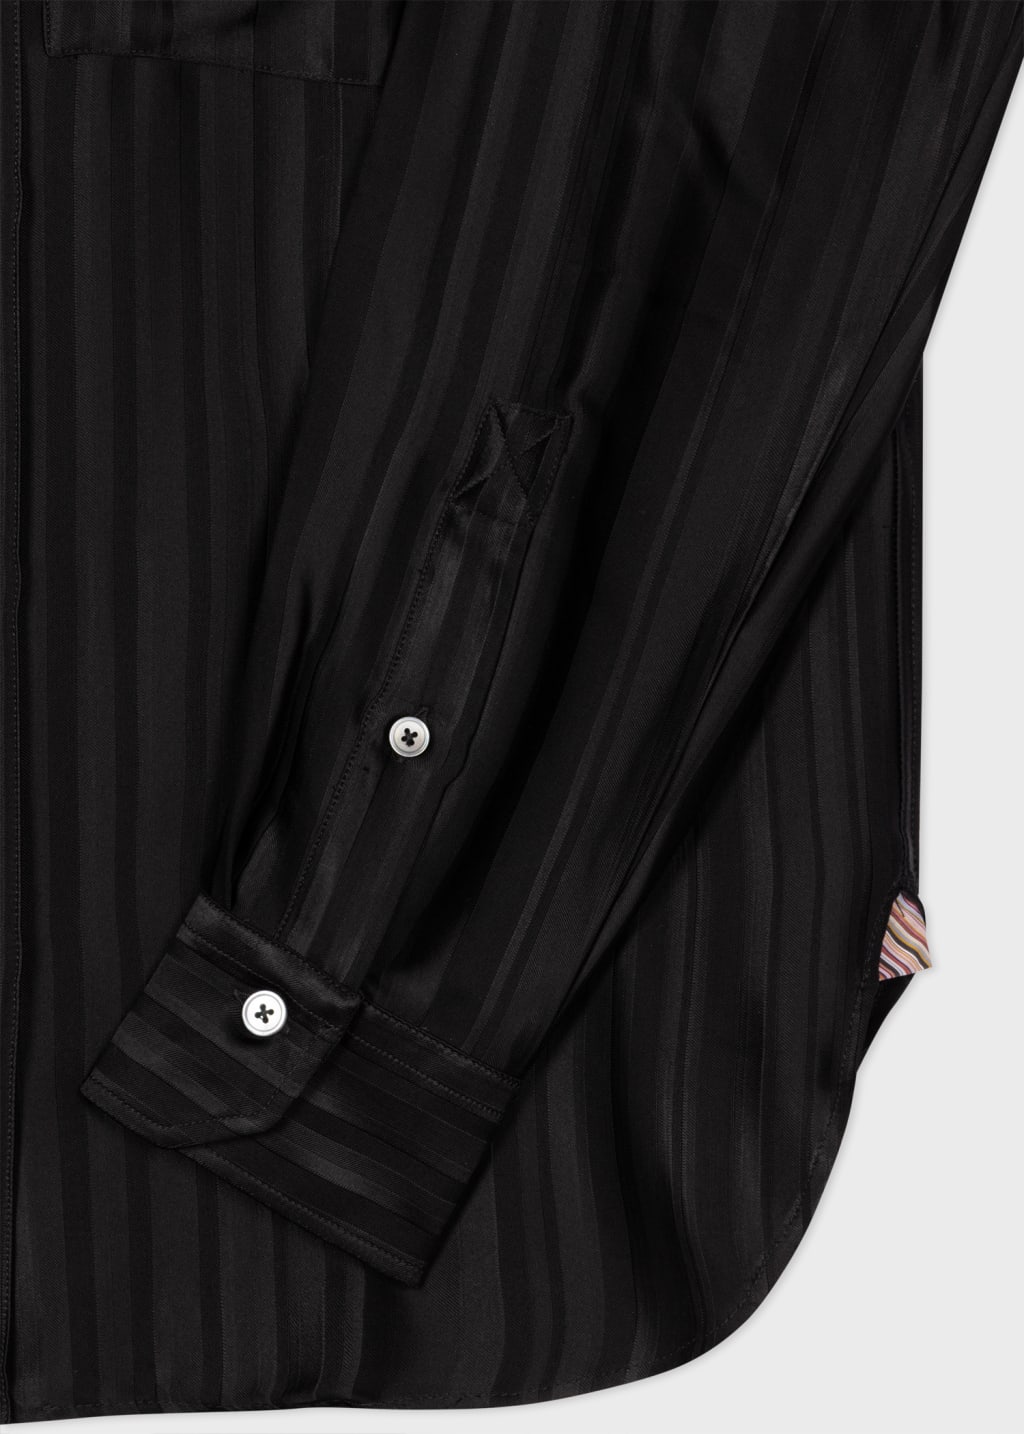 Detail View - Women's Black 'Shadow Stripe' Shirt Paul Smith